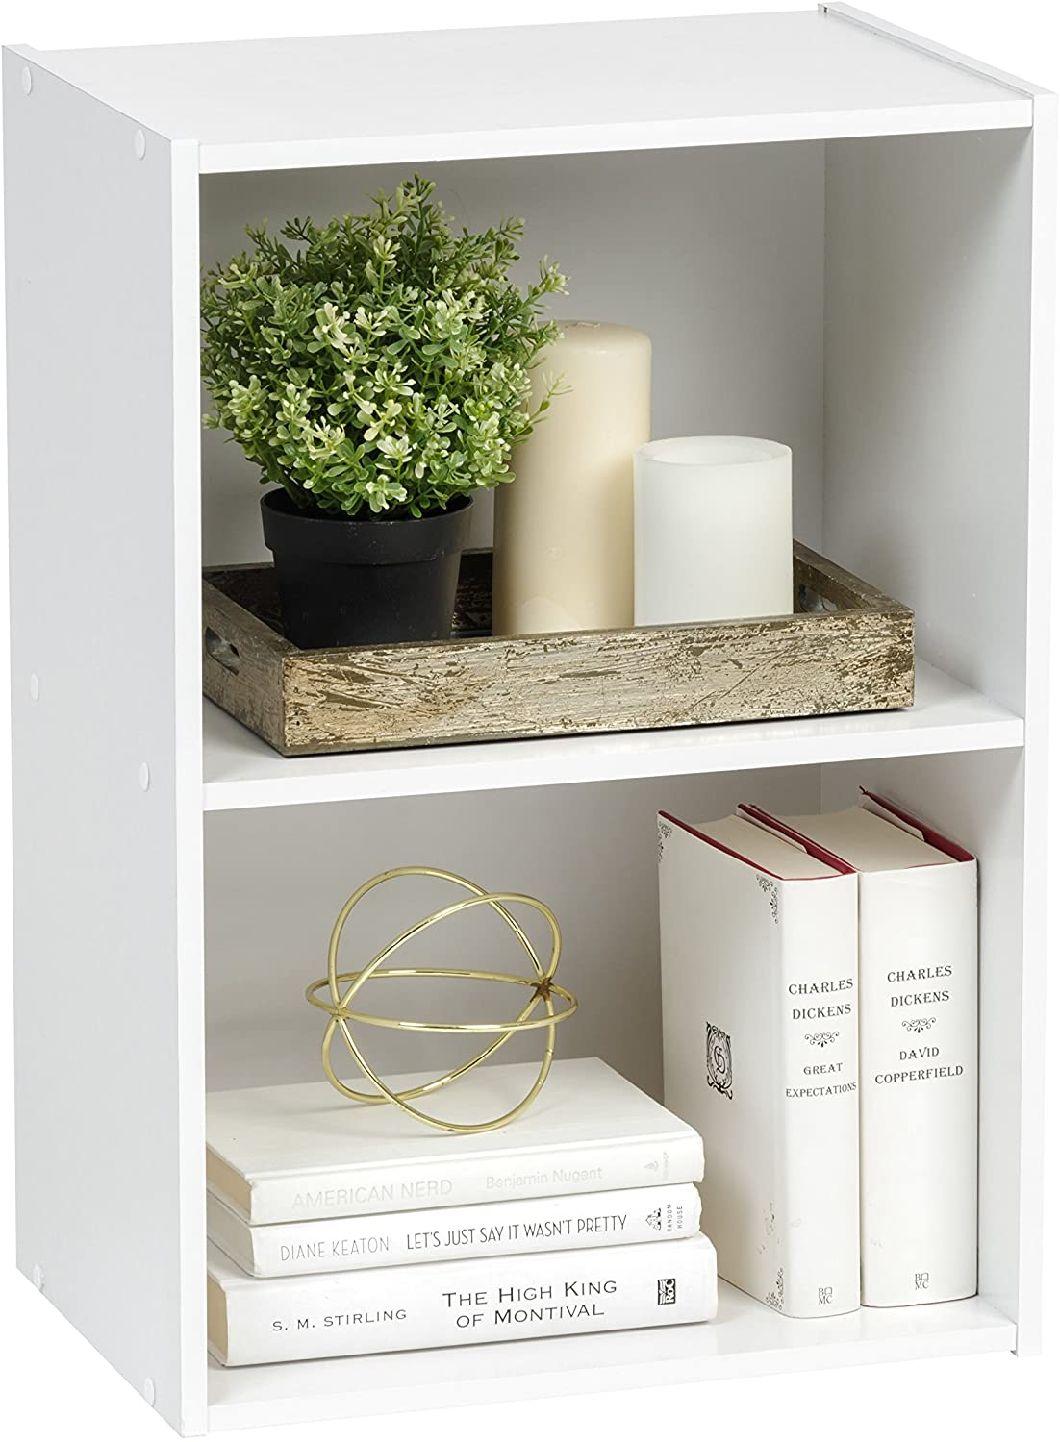 High Quality Bookshelf Bookcase Storage Shelf for Home Office Living Room